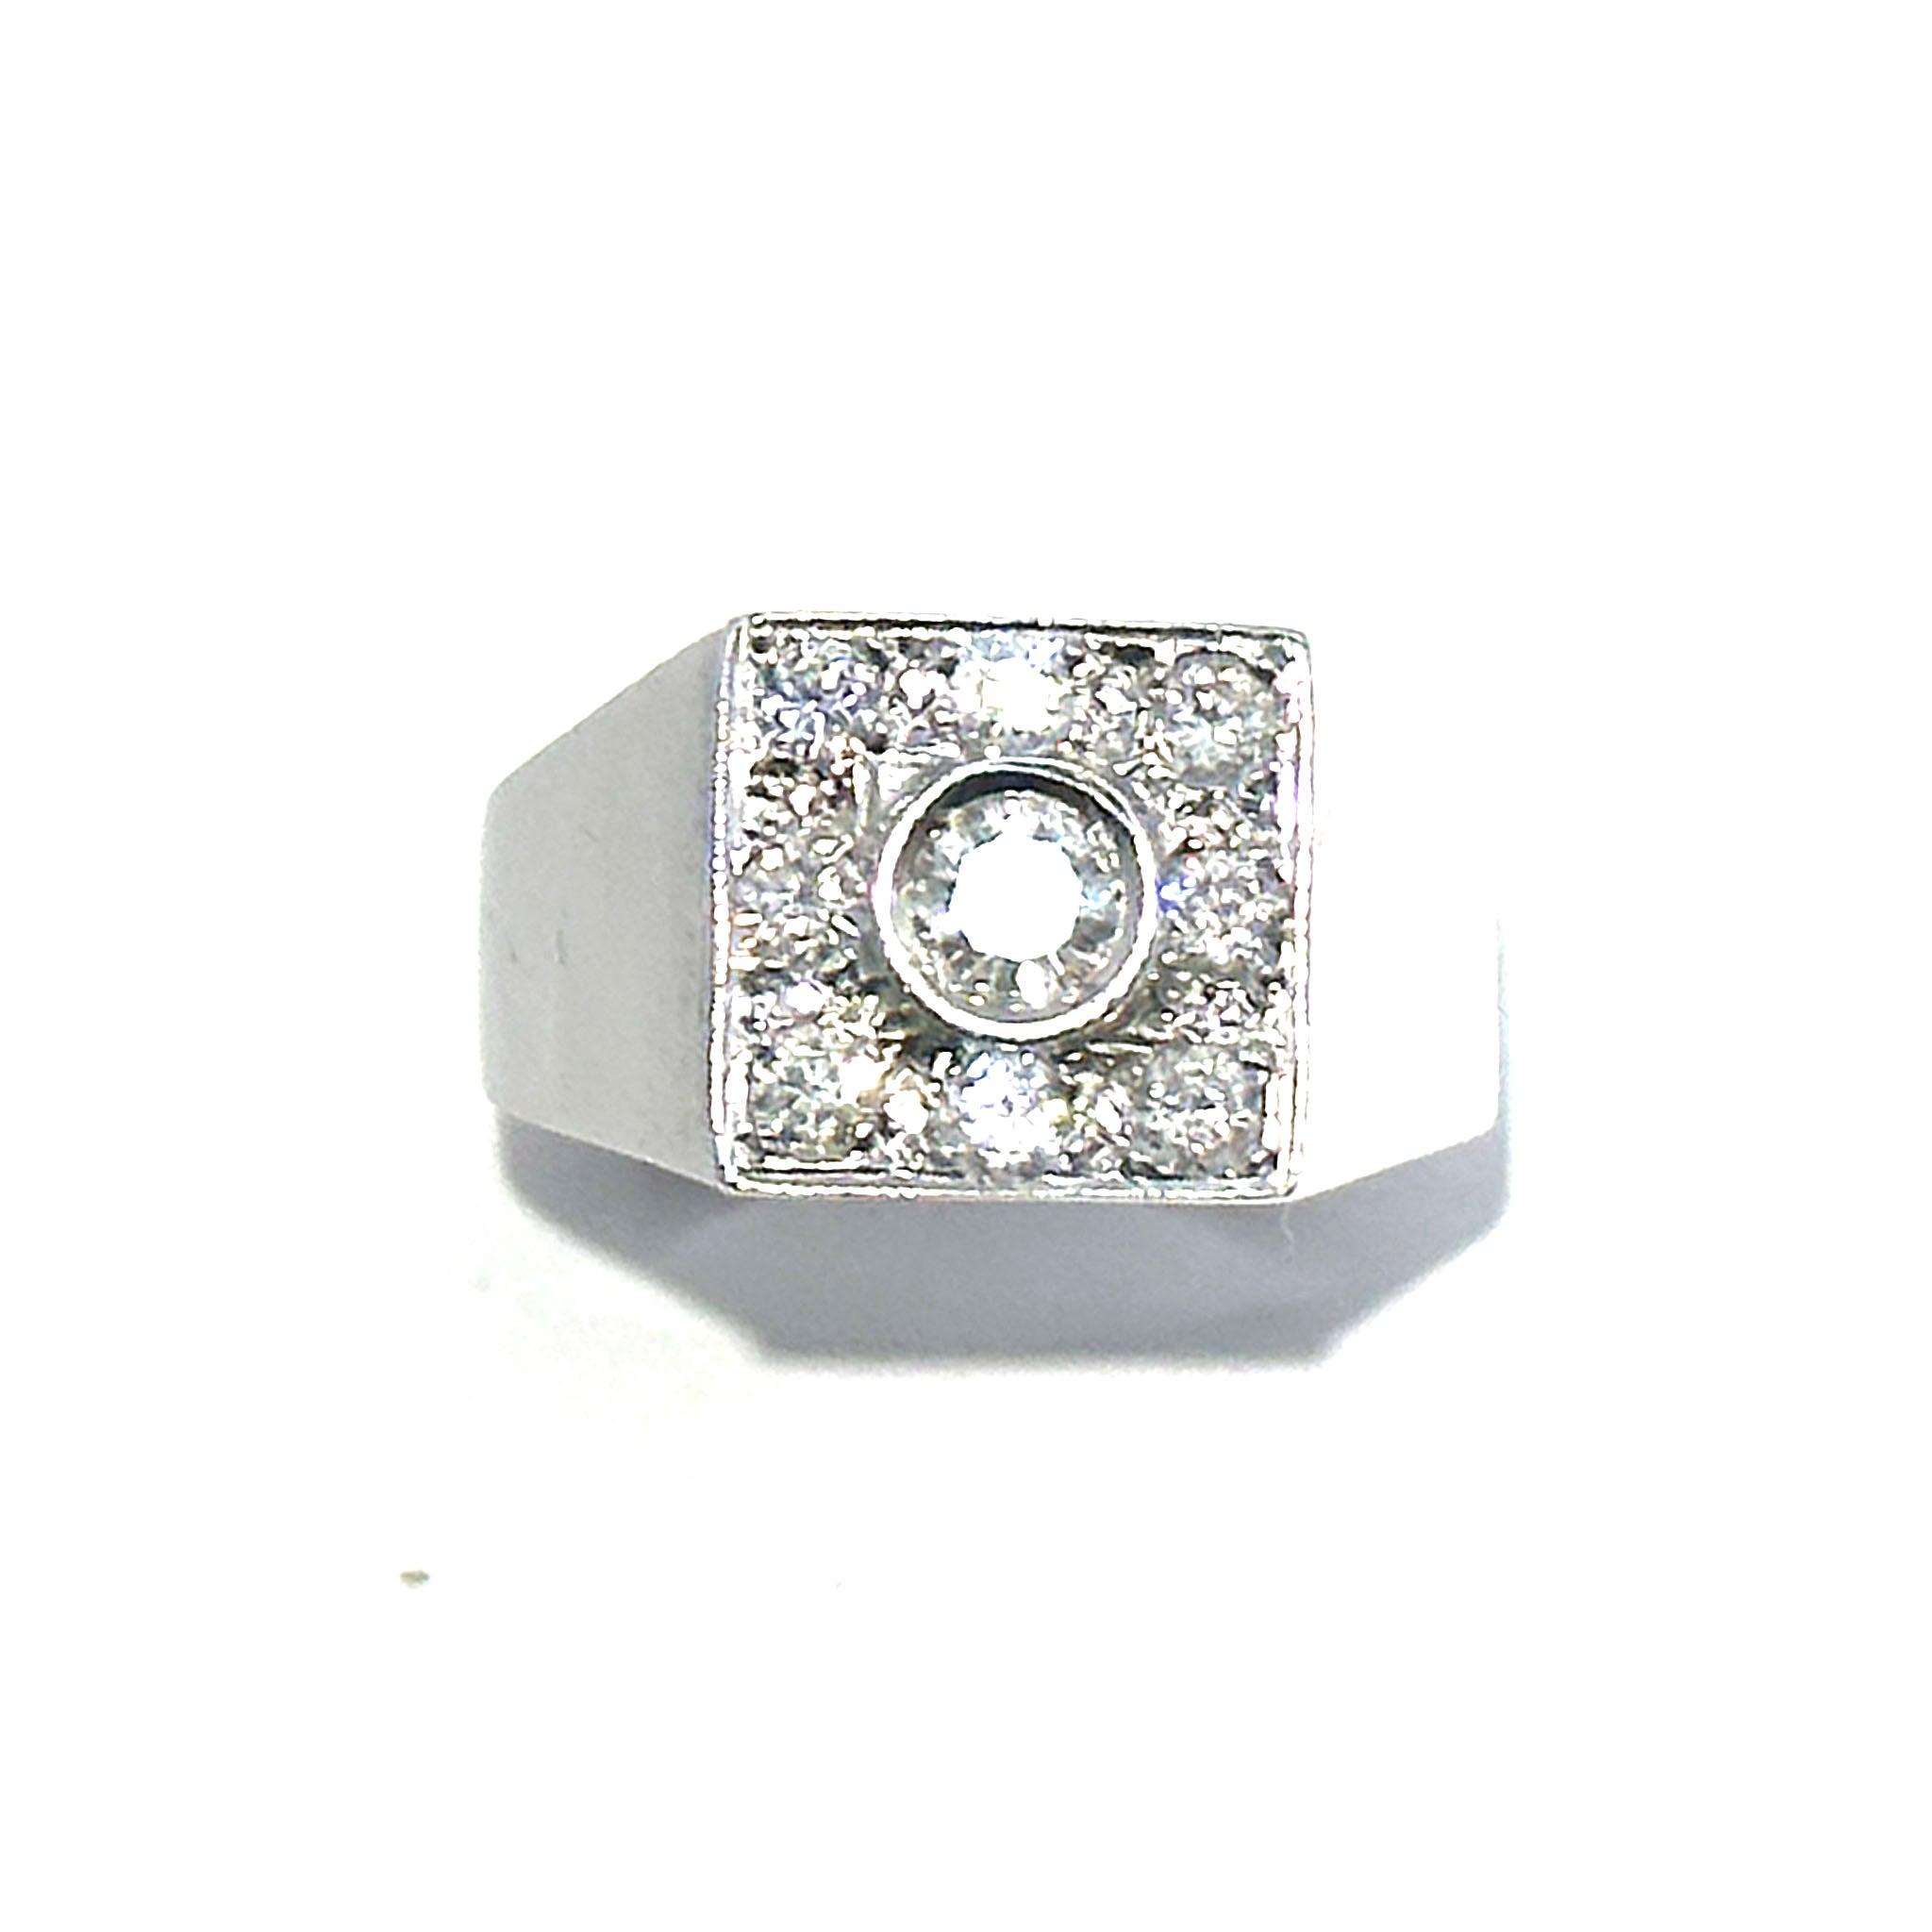 $7500 1.04 Ct Men's Diamond Ring 14Kt White Gold - Esmeralda Jewels 